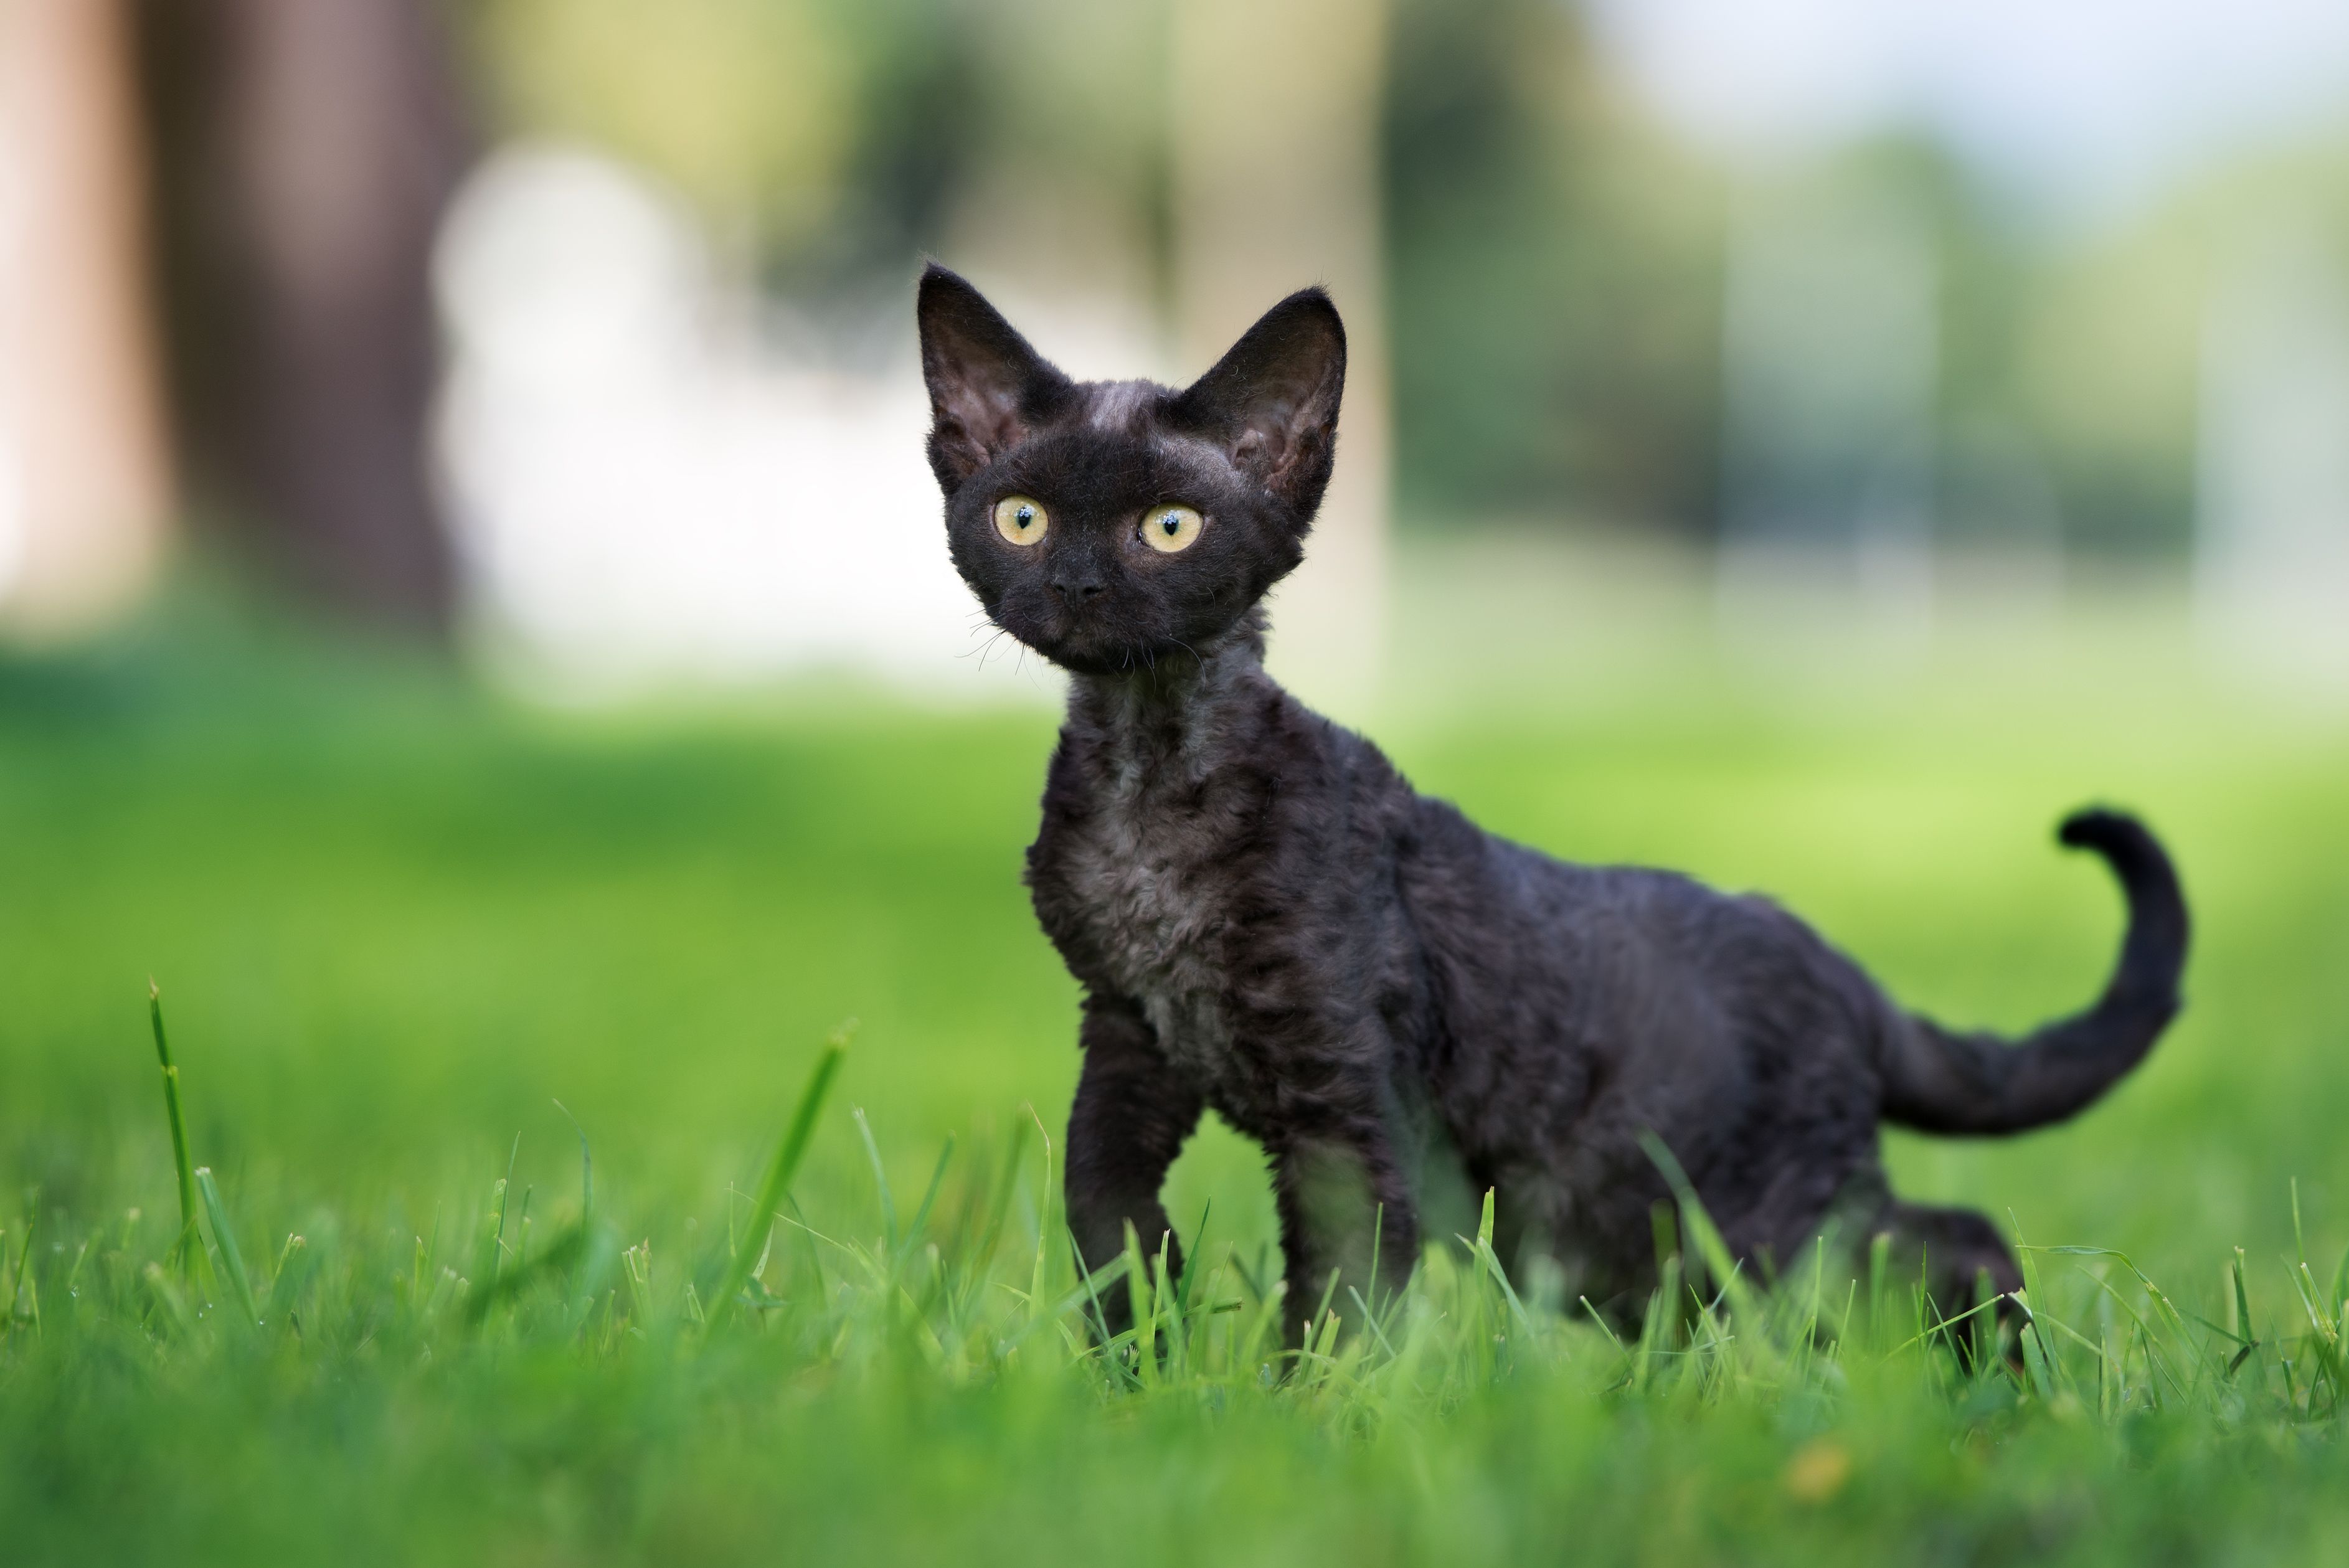 https://hips.hearstapps.com/hmg-prod.s3.amazonaws.com/images/black-cat-breeds-devon-rex-1563296186.jpg